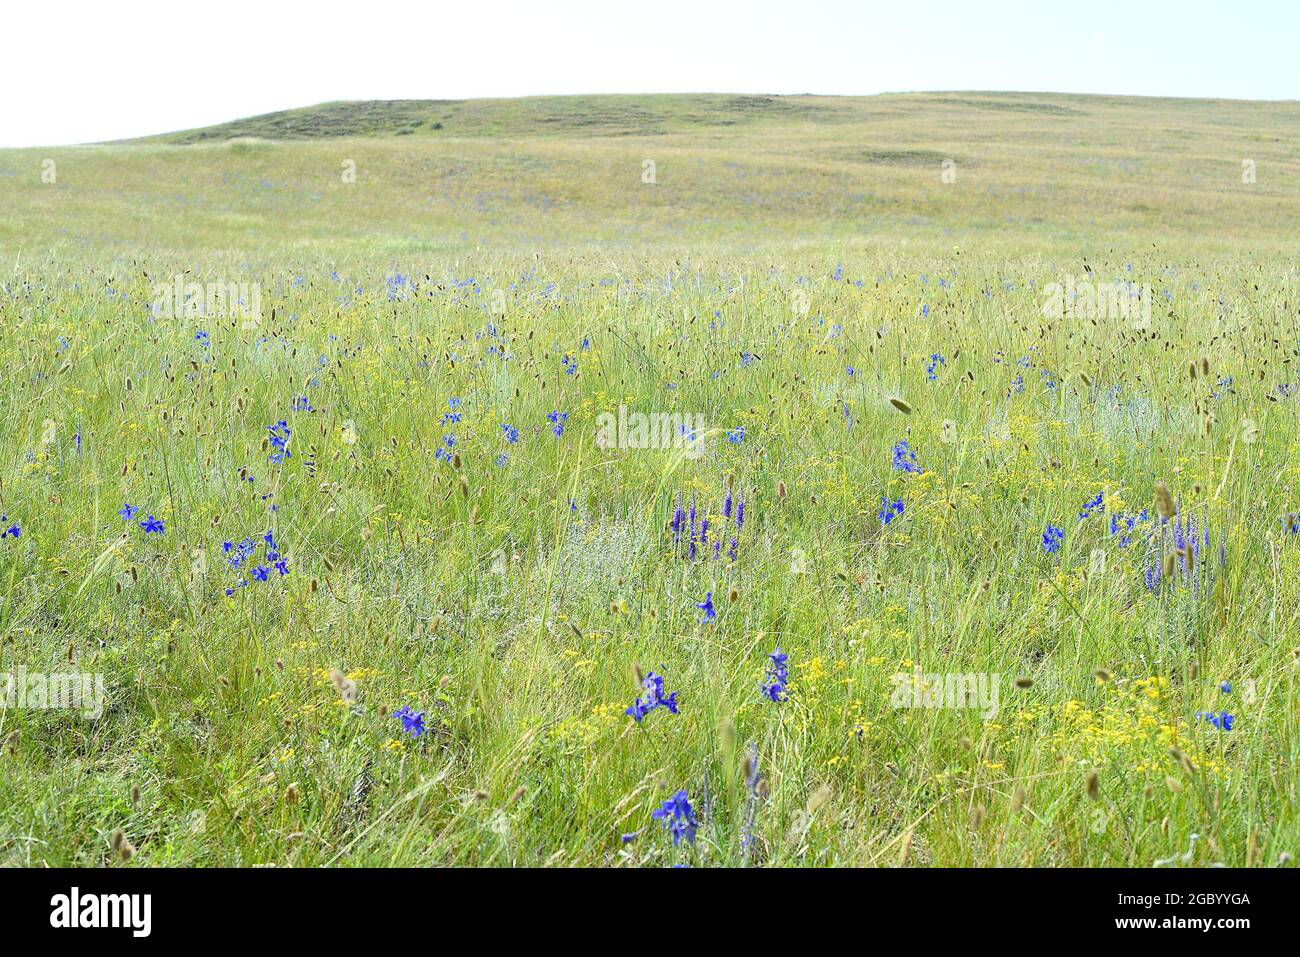 Delphinium grandiflorum or large-flowered delphinium flowers growing in Olkhon island, Russia Stock Photo